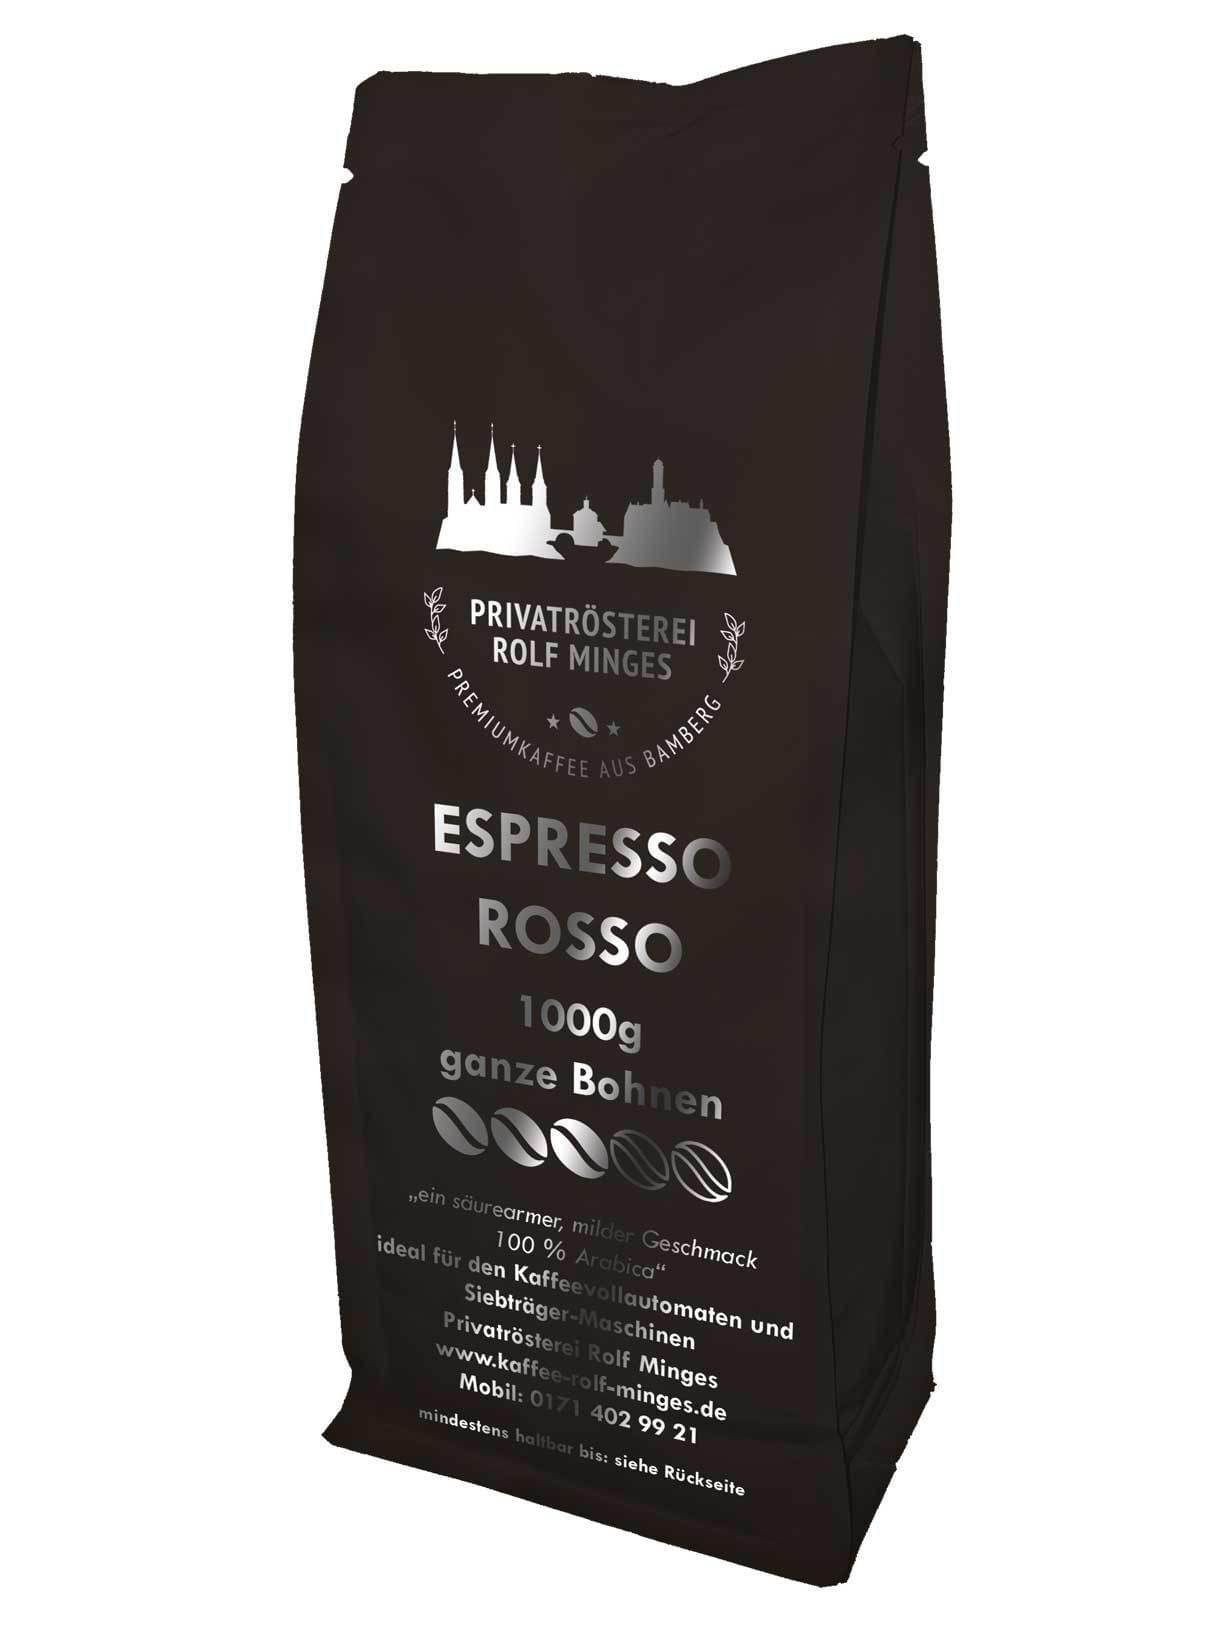 Privatrösterei Rolf Minges Espresso Rosso - 500g